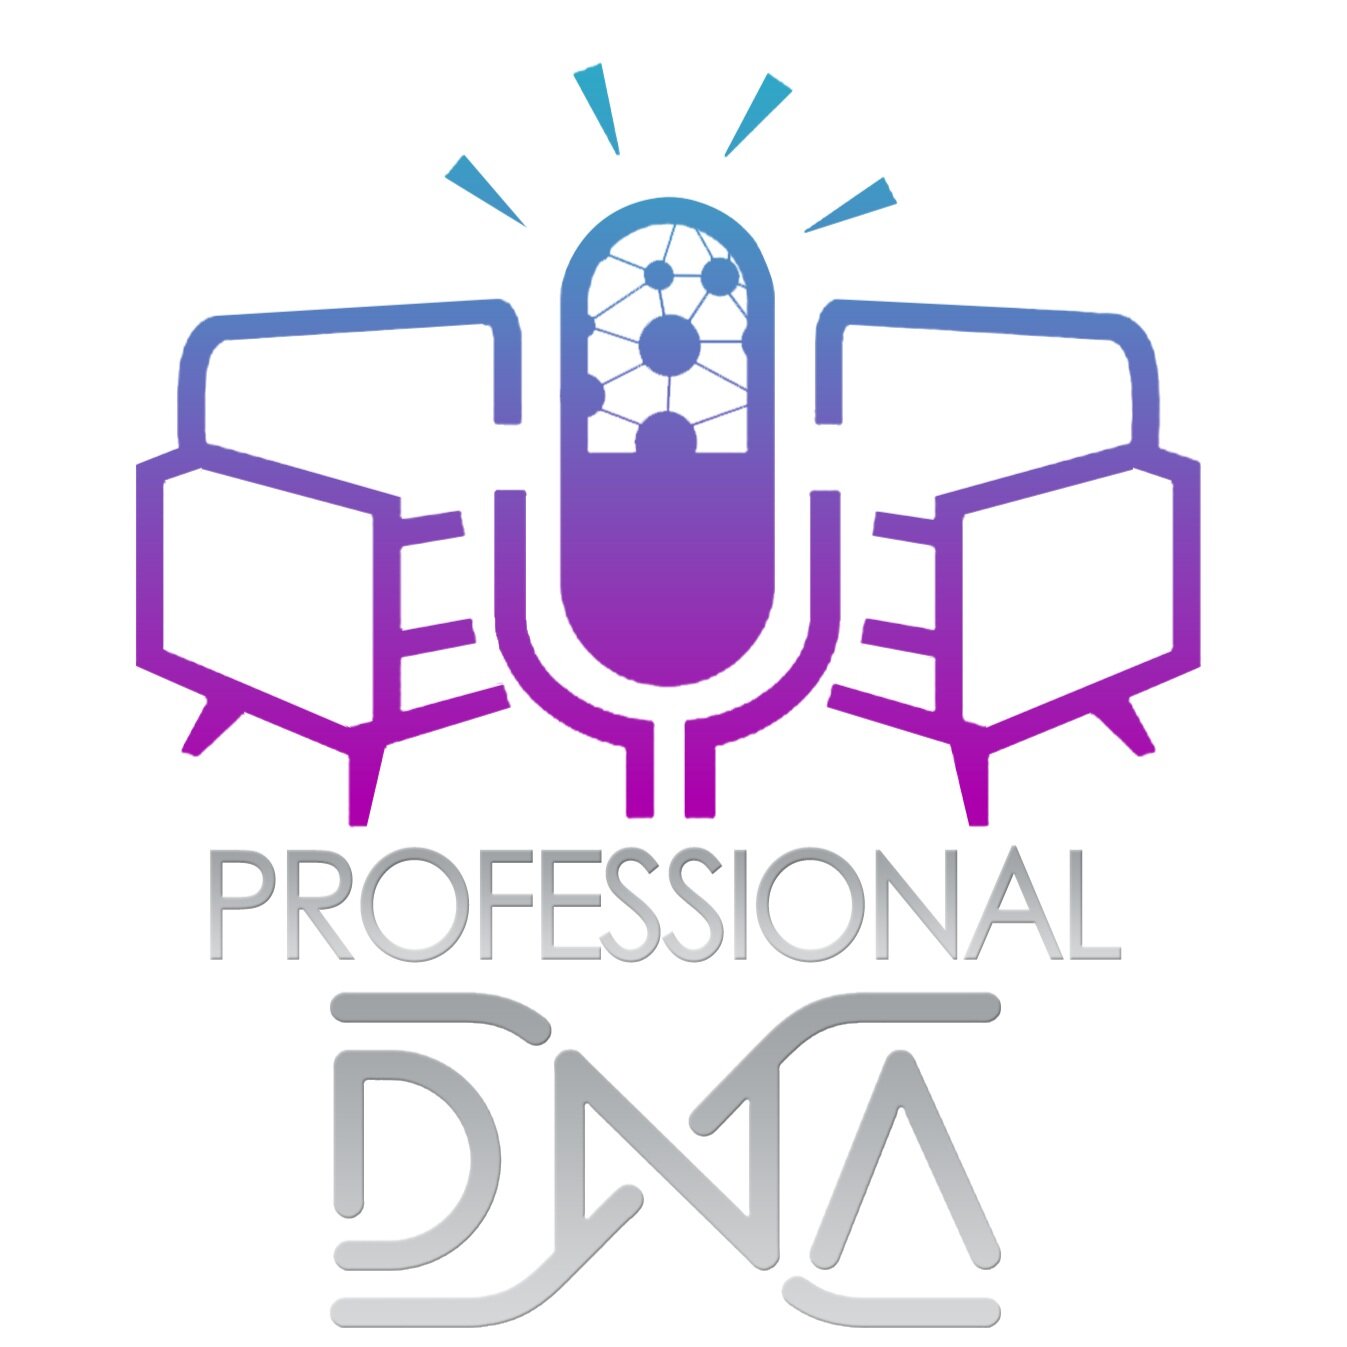 Professional DNA